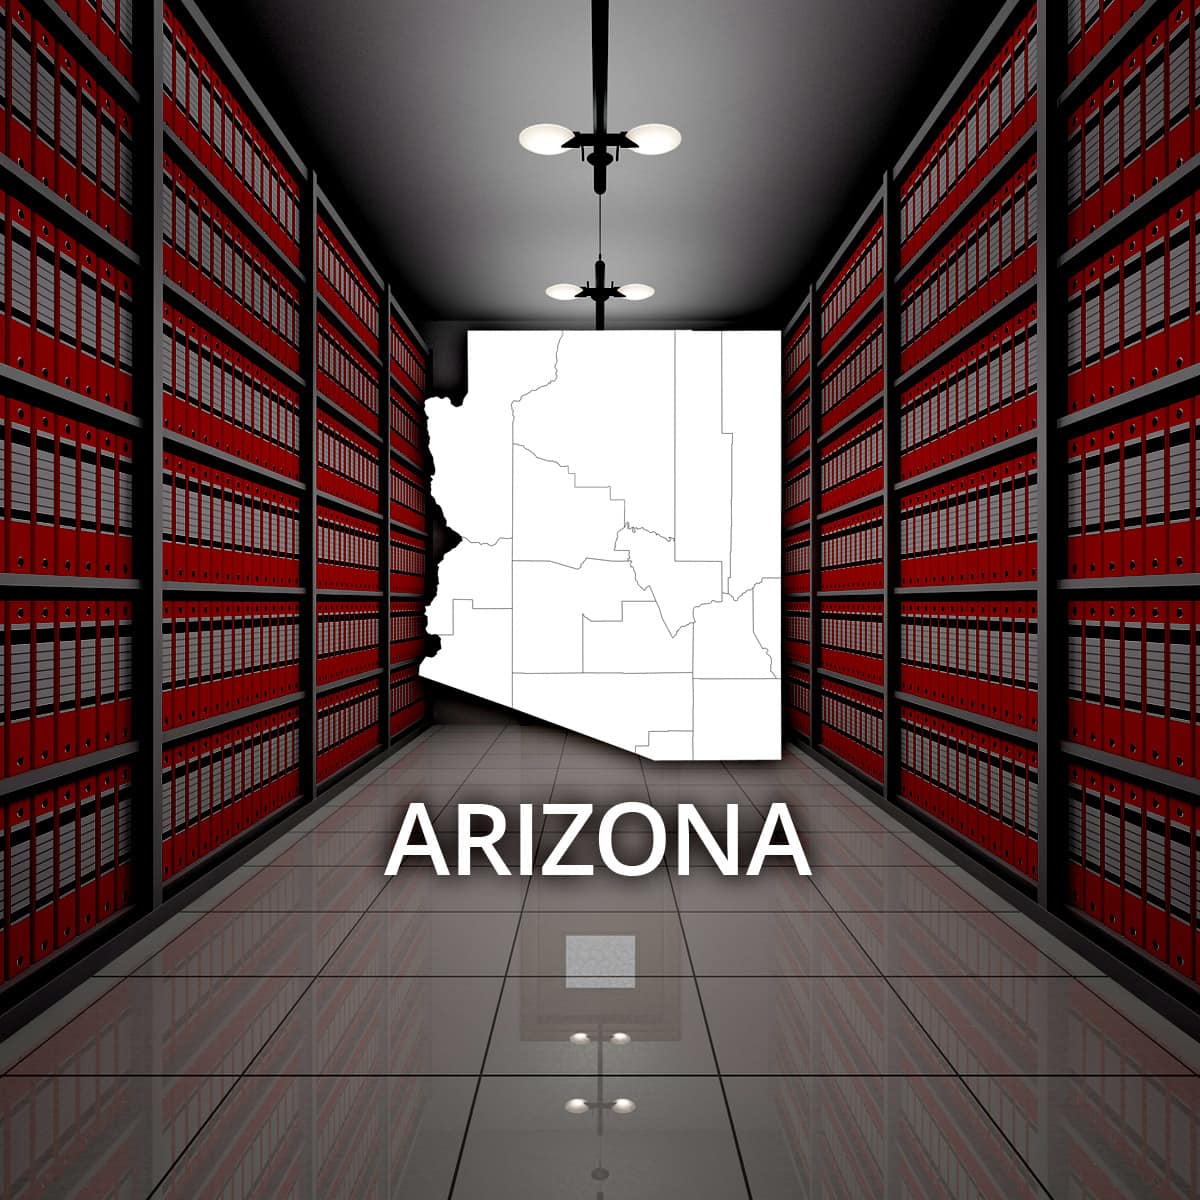 Arizona State Public Records Online RecordsFinder